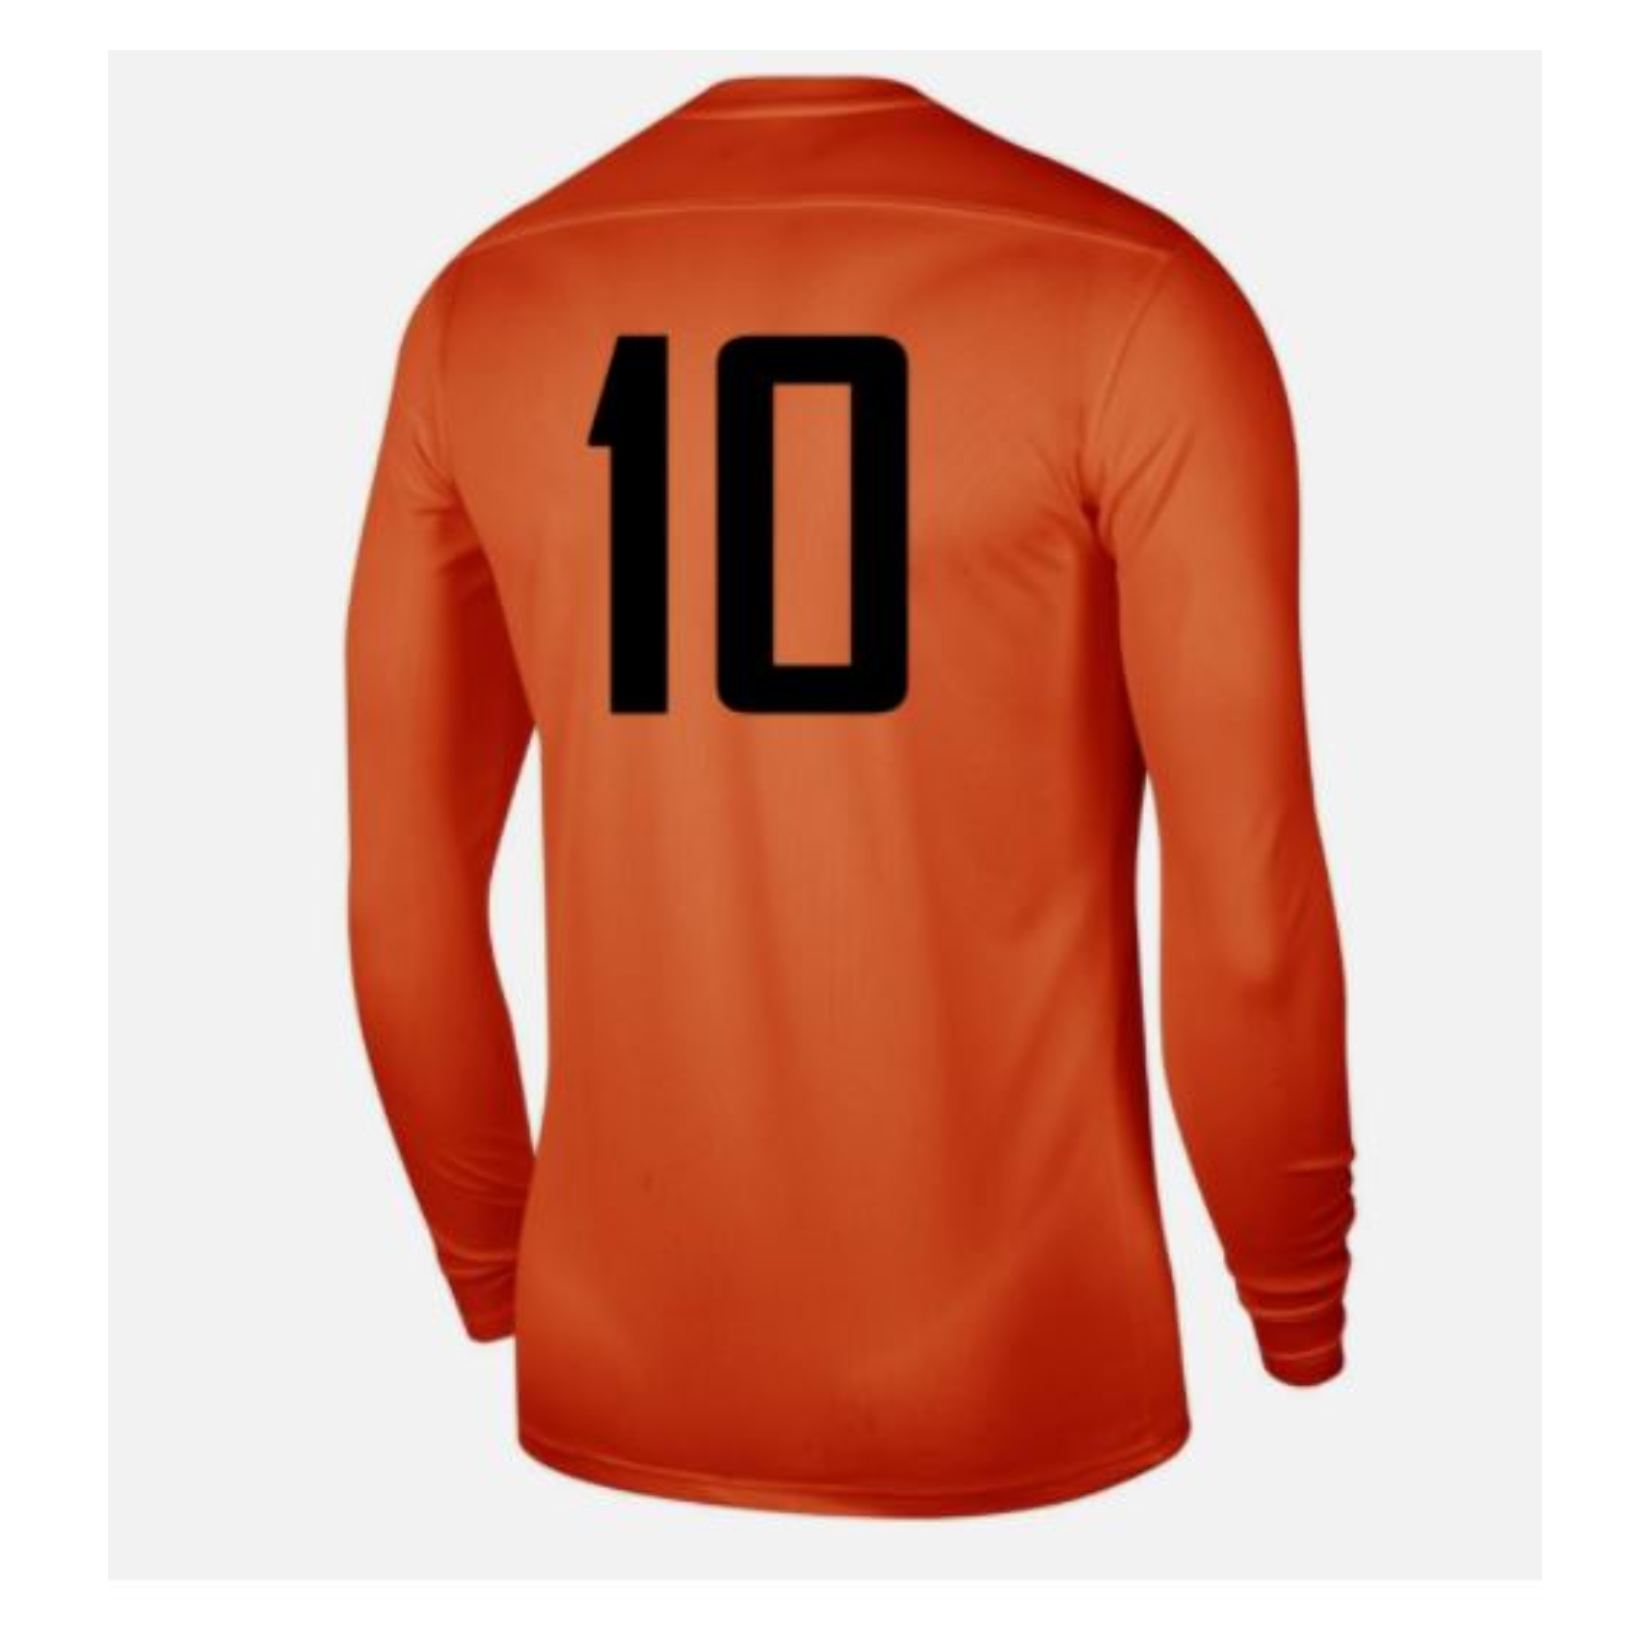 Nike Park VII Dri-FIT Long Sleeve Football Shirt